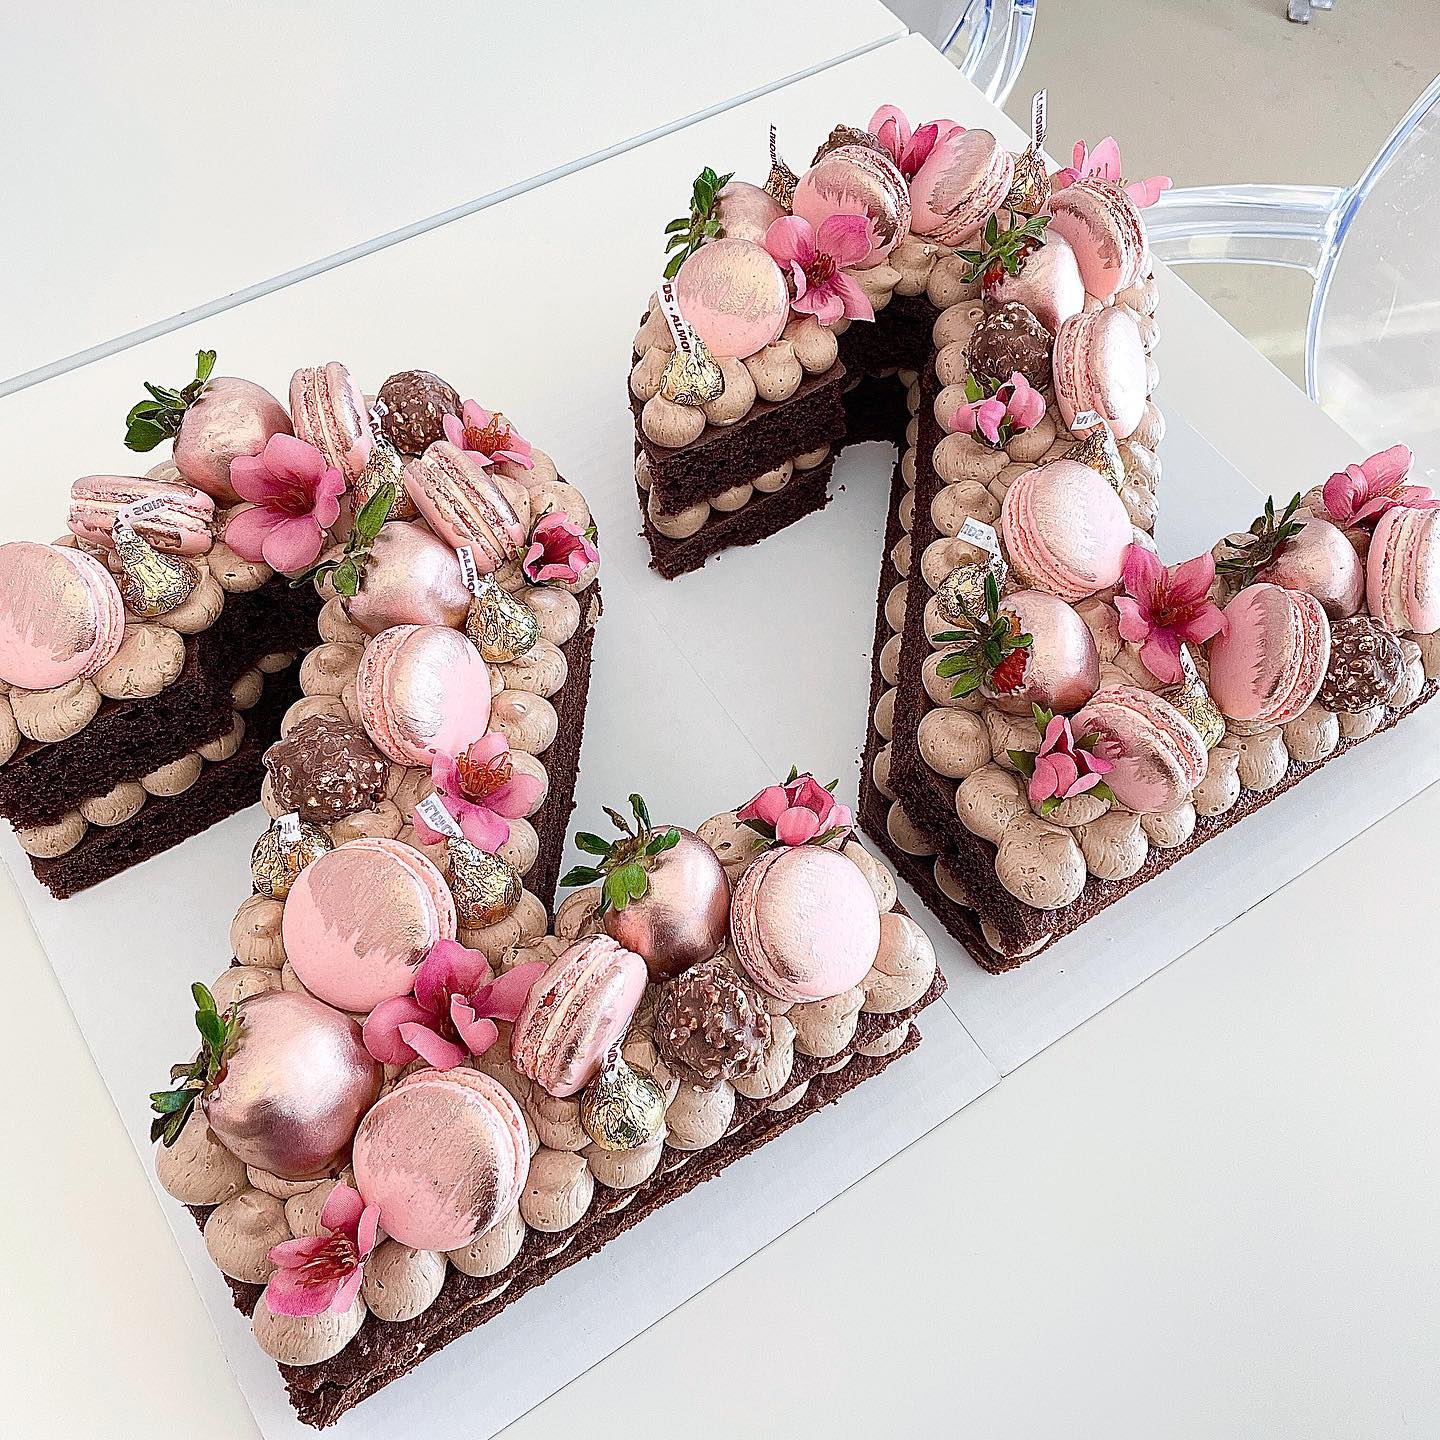 DeeVa Sweets|Birthday Cakes|San Antonio